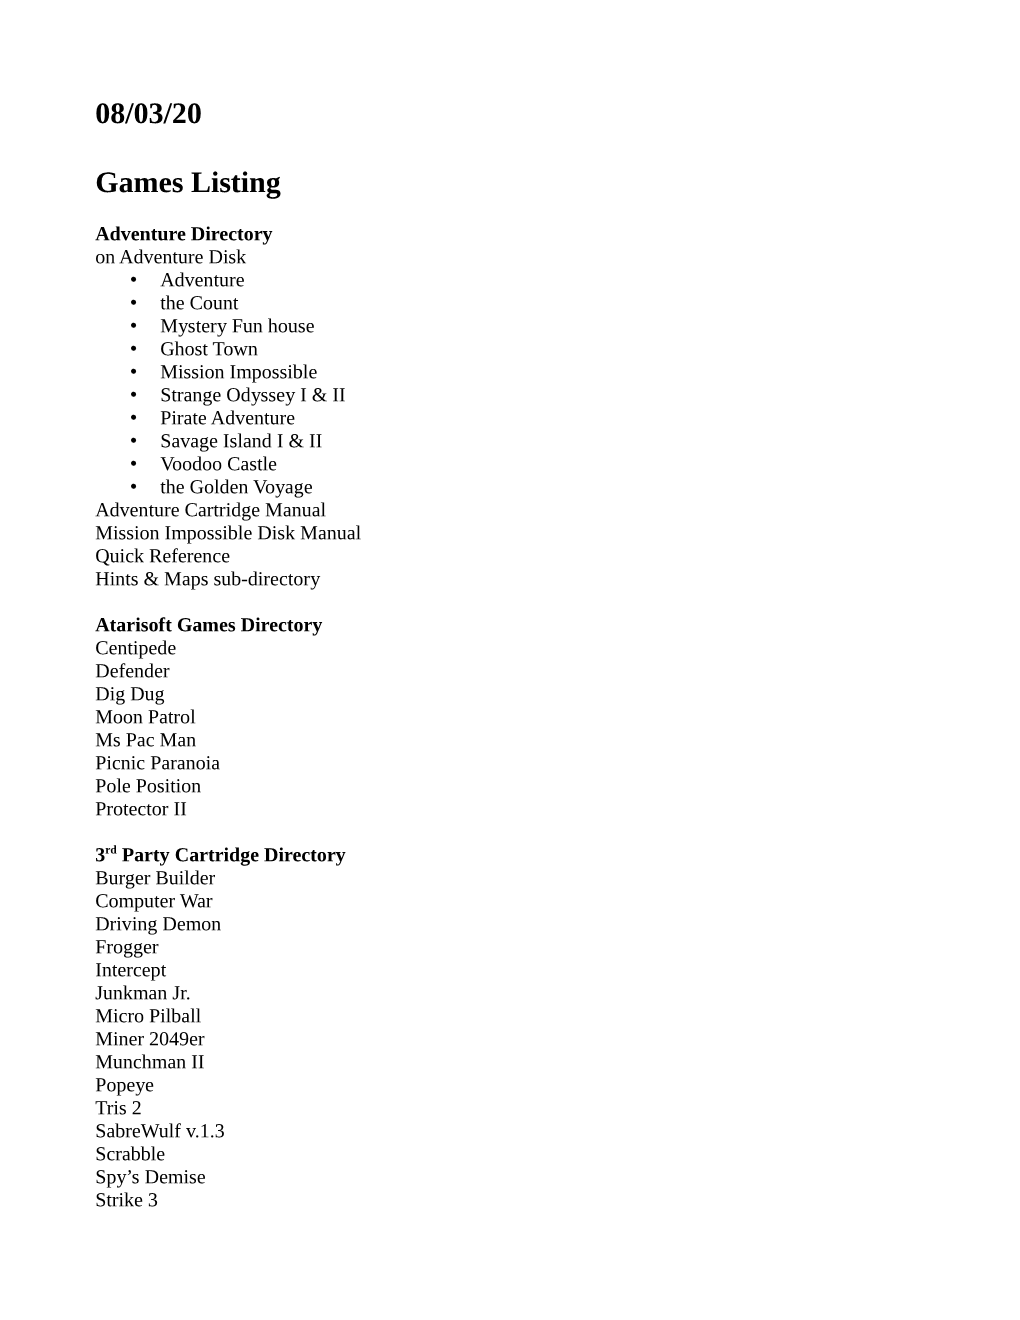 08/03/20 Games Listing